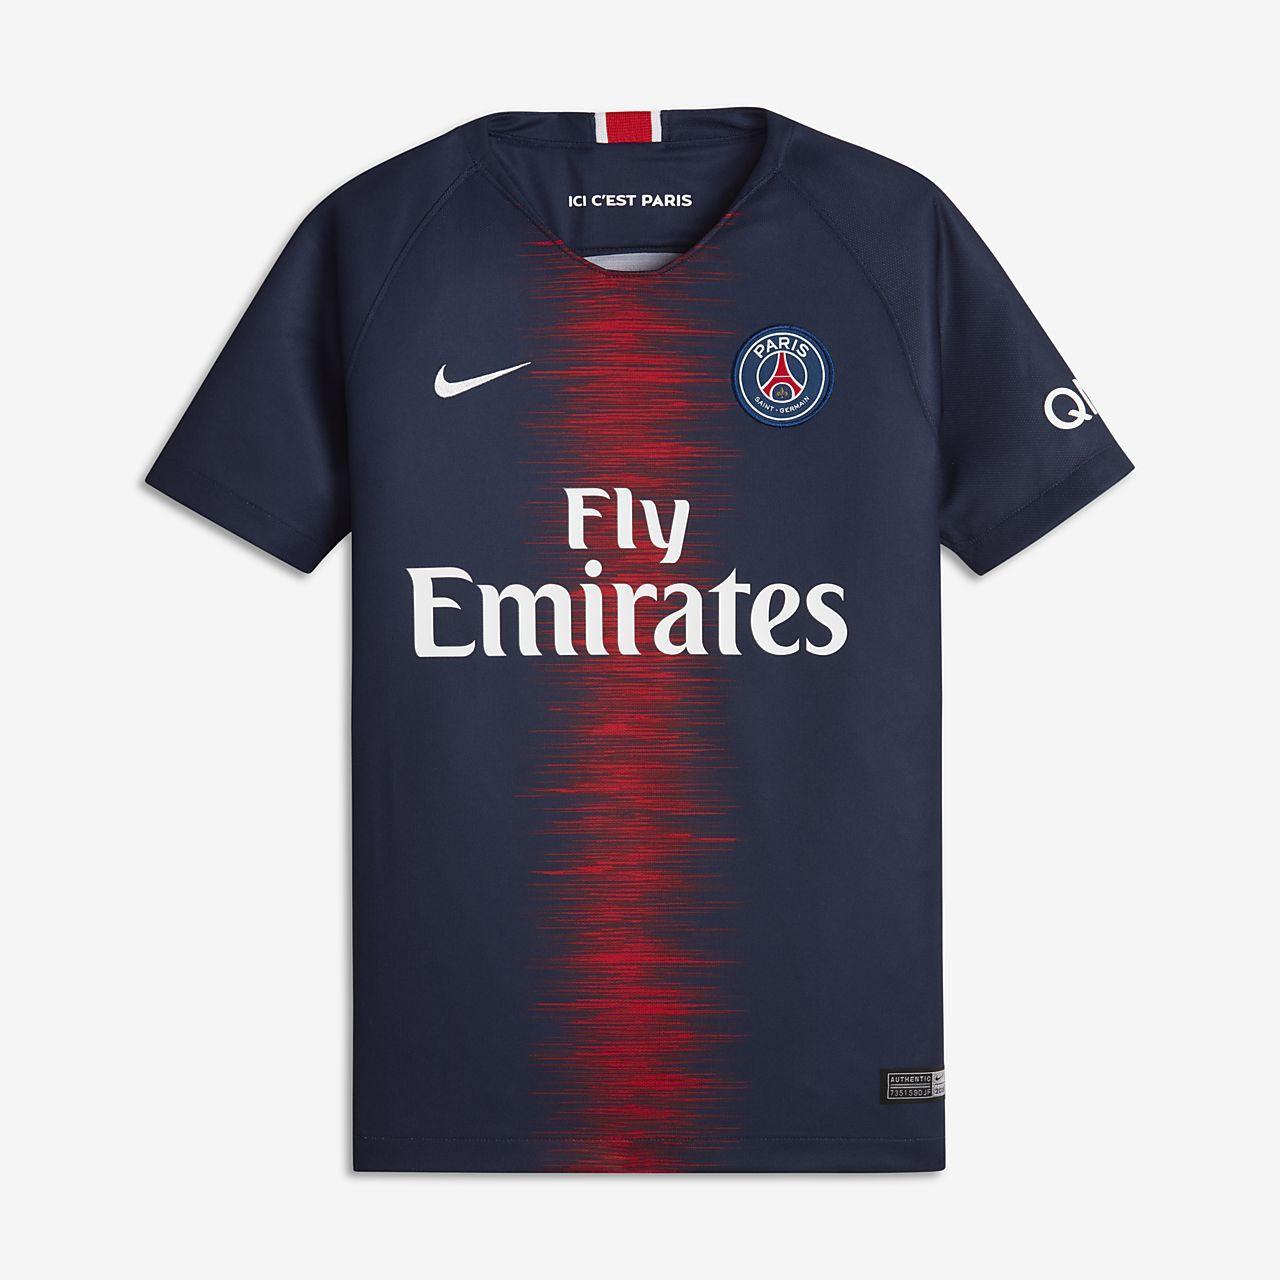 Paris 2018 Logo - 19 Paris Saint Germain Stadium Home Older Kids' Football Shirt